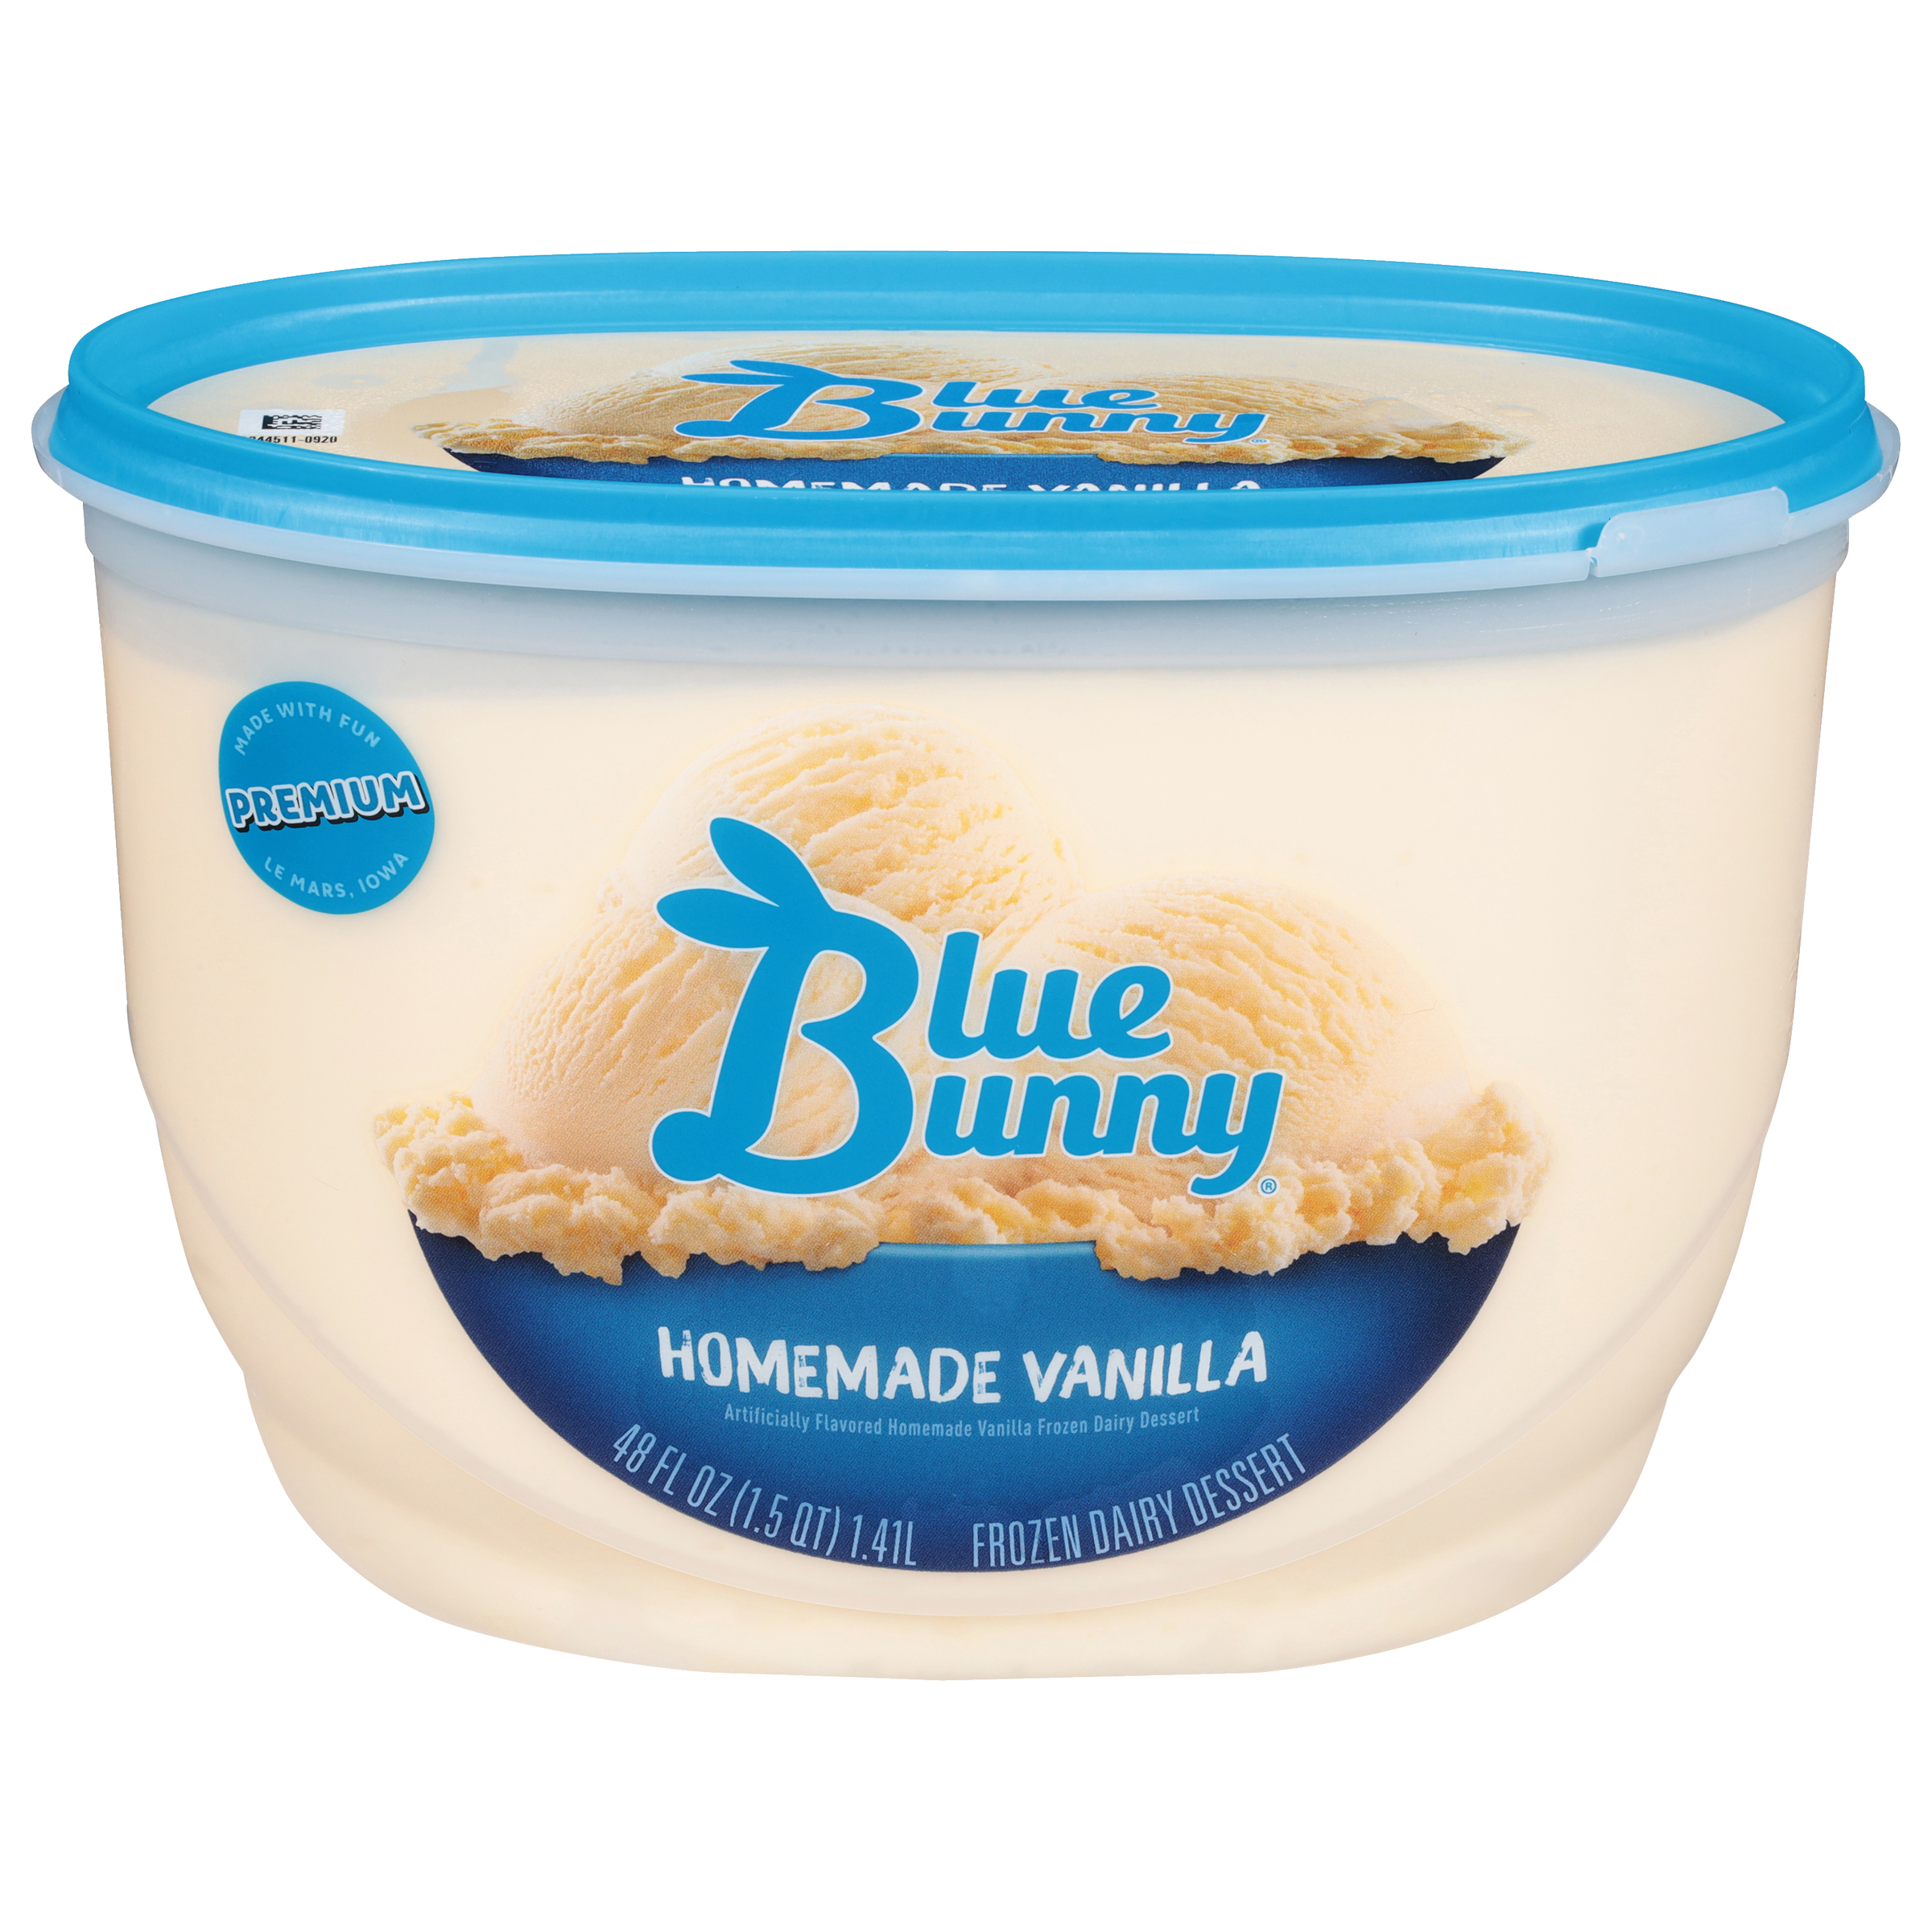 Blue Bunny Homemade Vanilla Frozen Dessert, 48 fl oz - image 1 of 9